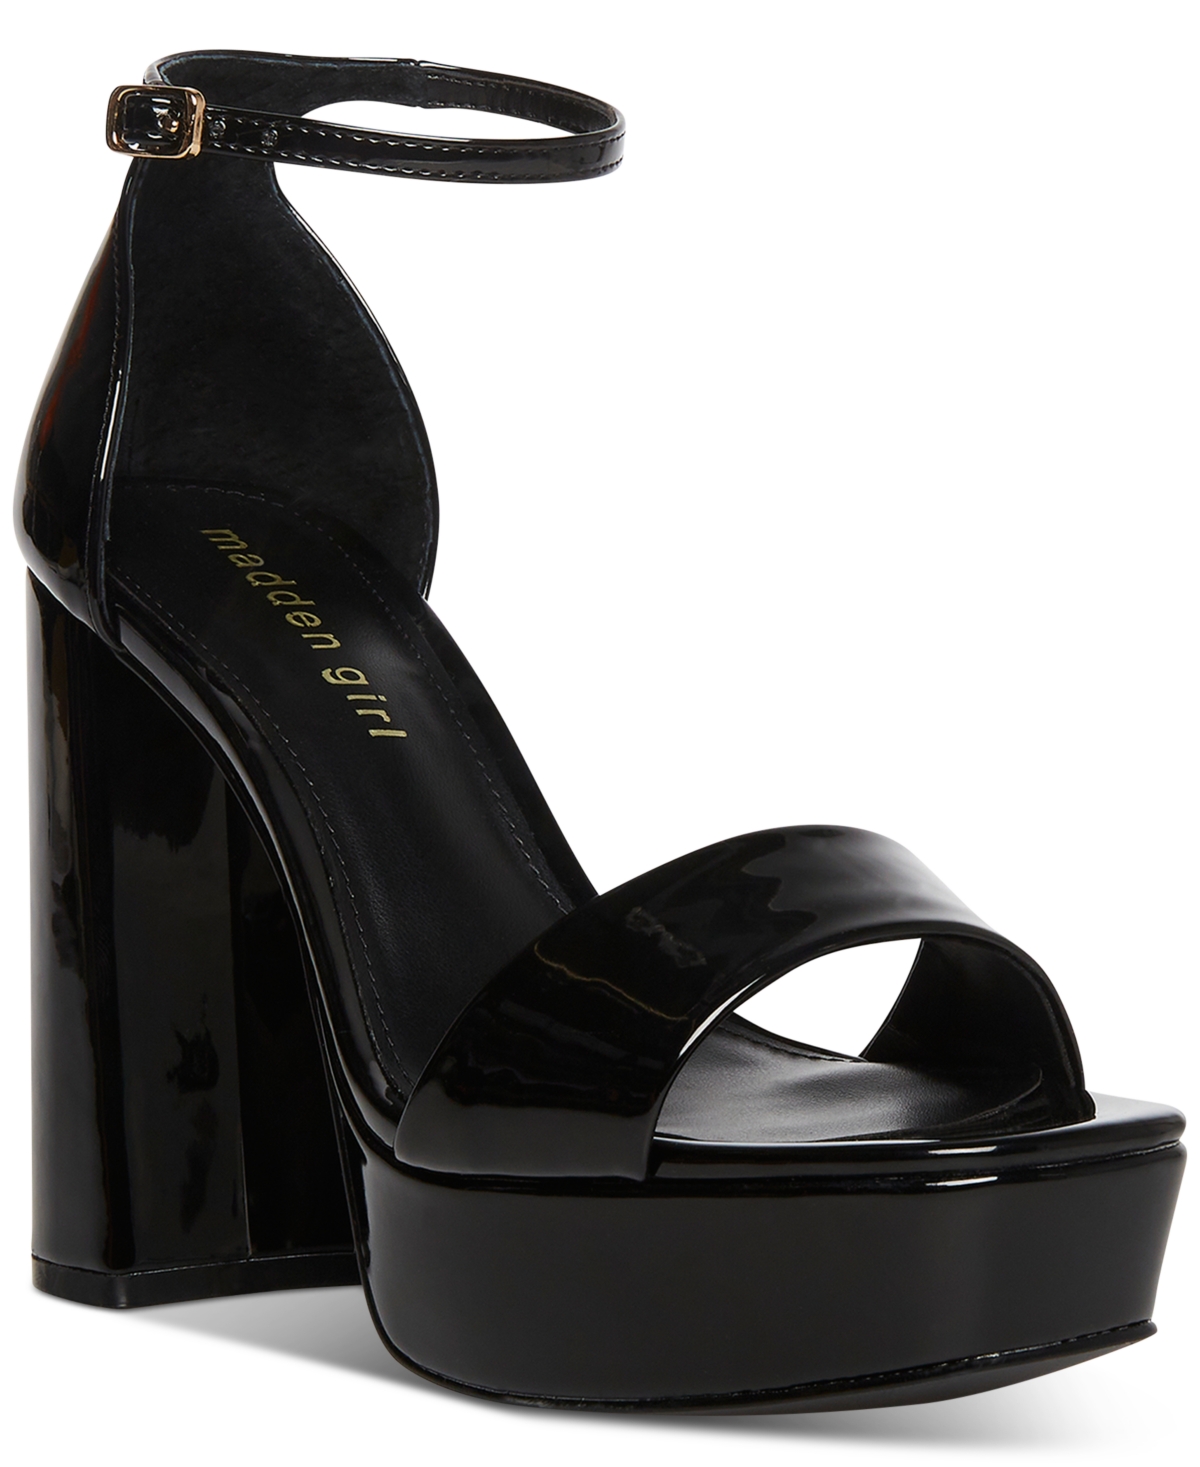 Omega Two-Piece Platform Dress Sandals - Black Patent